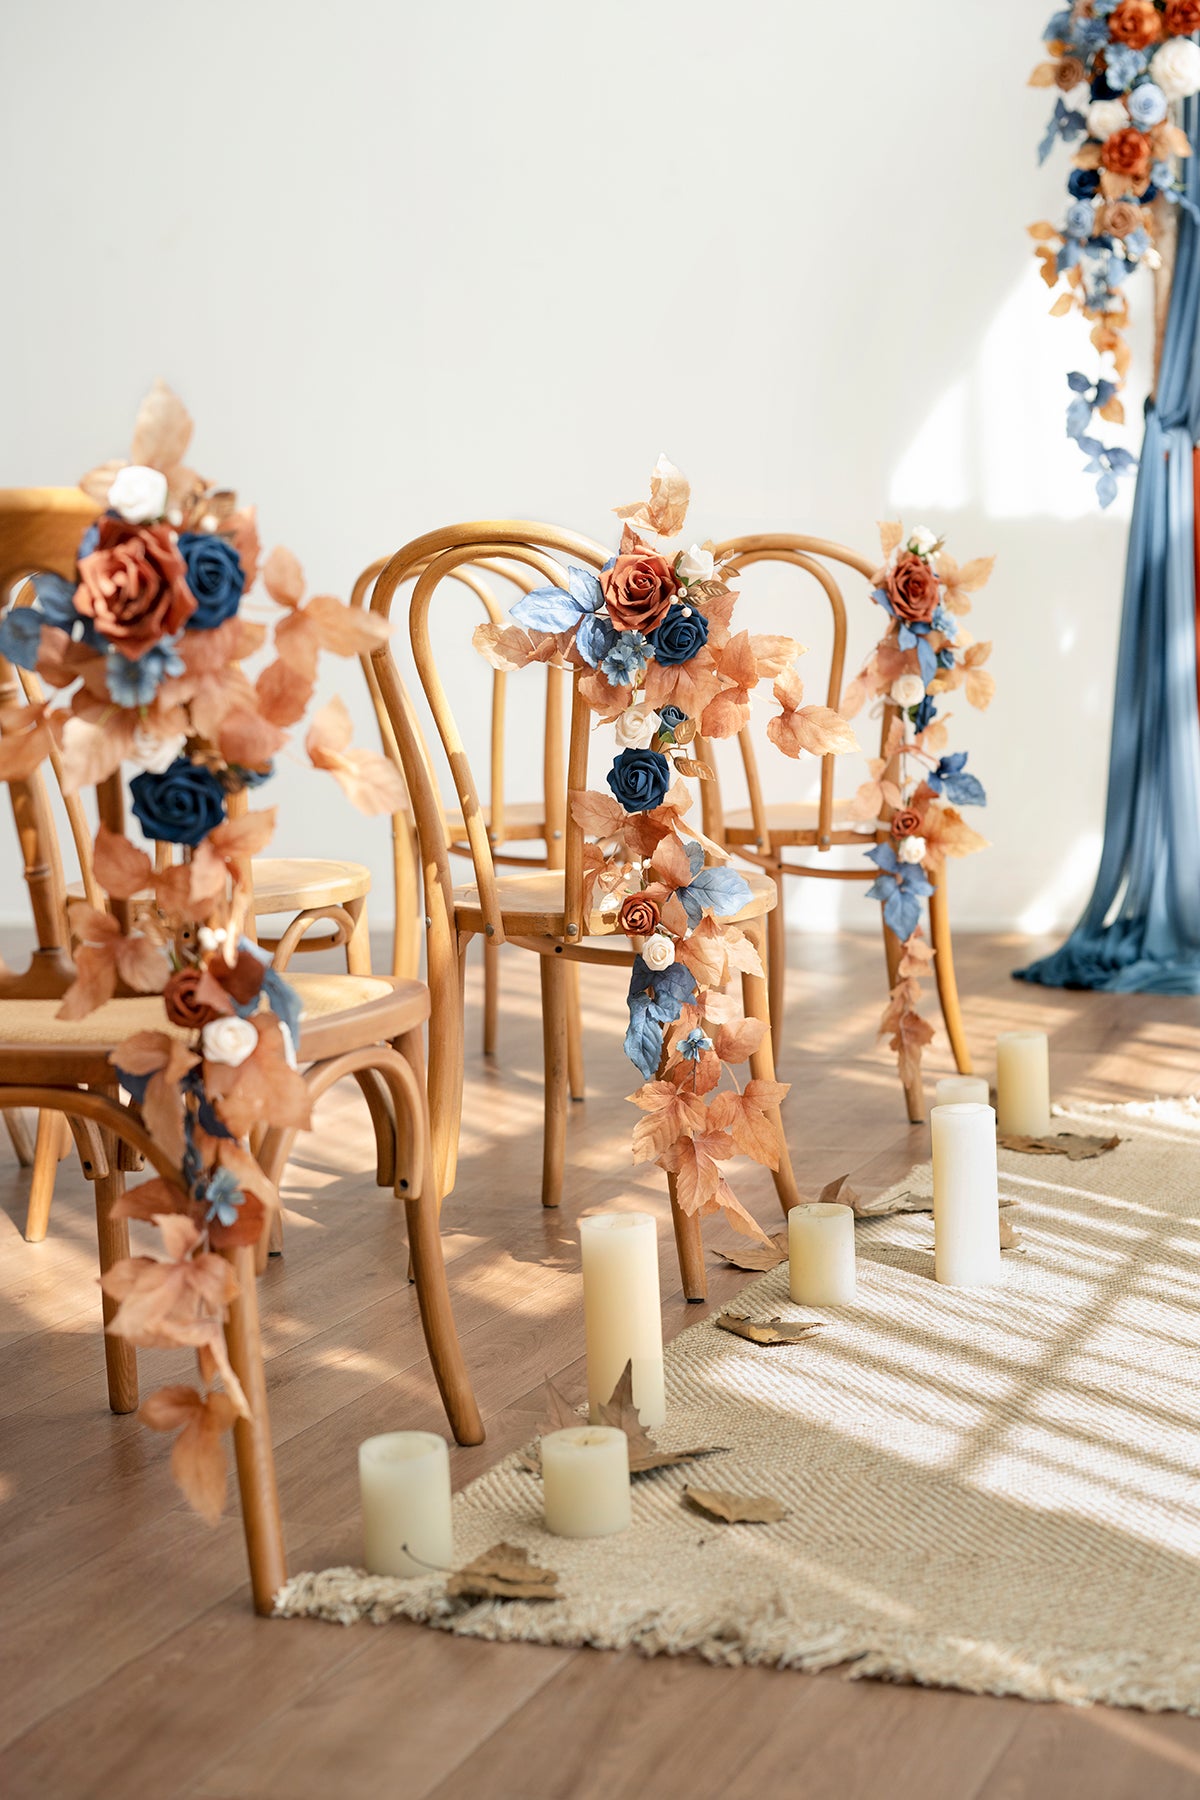 Pre-Arranged Wedding Flower Packages in Russet Orange & Denim Blue